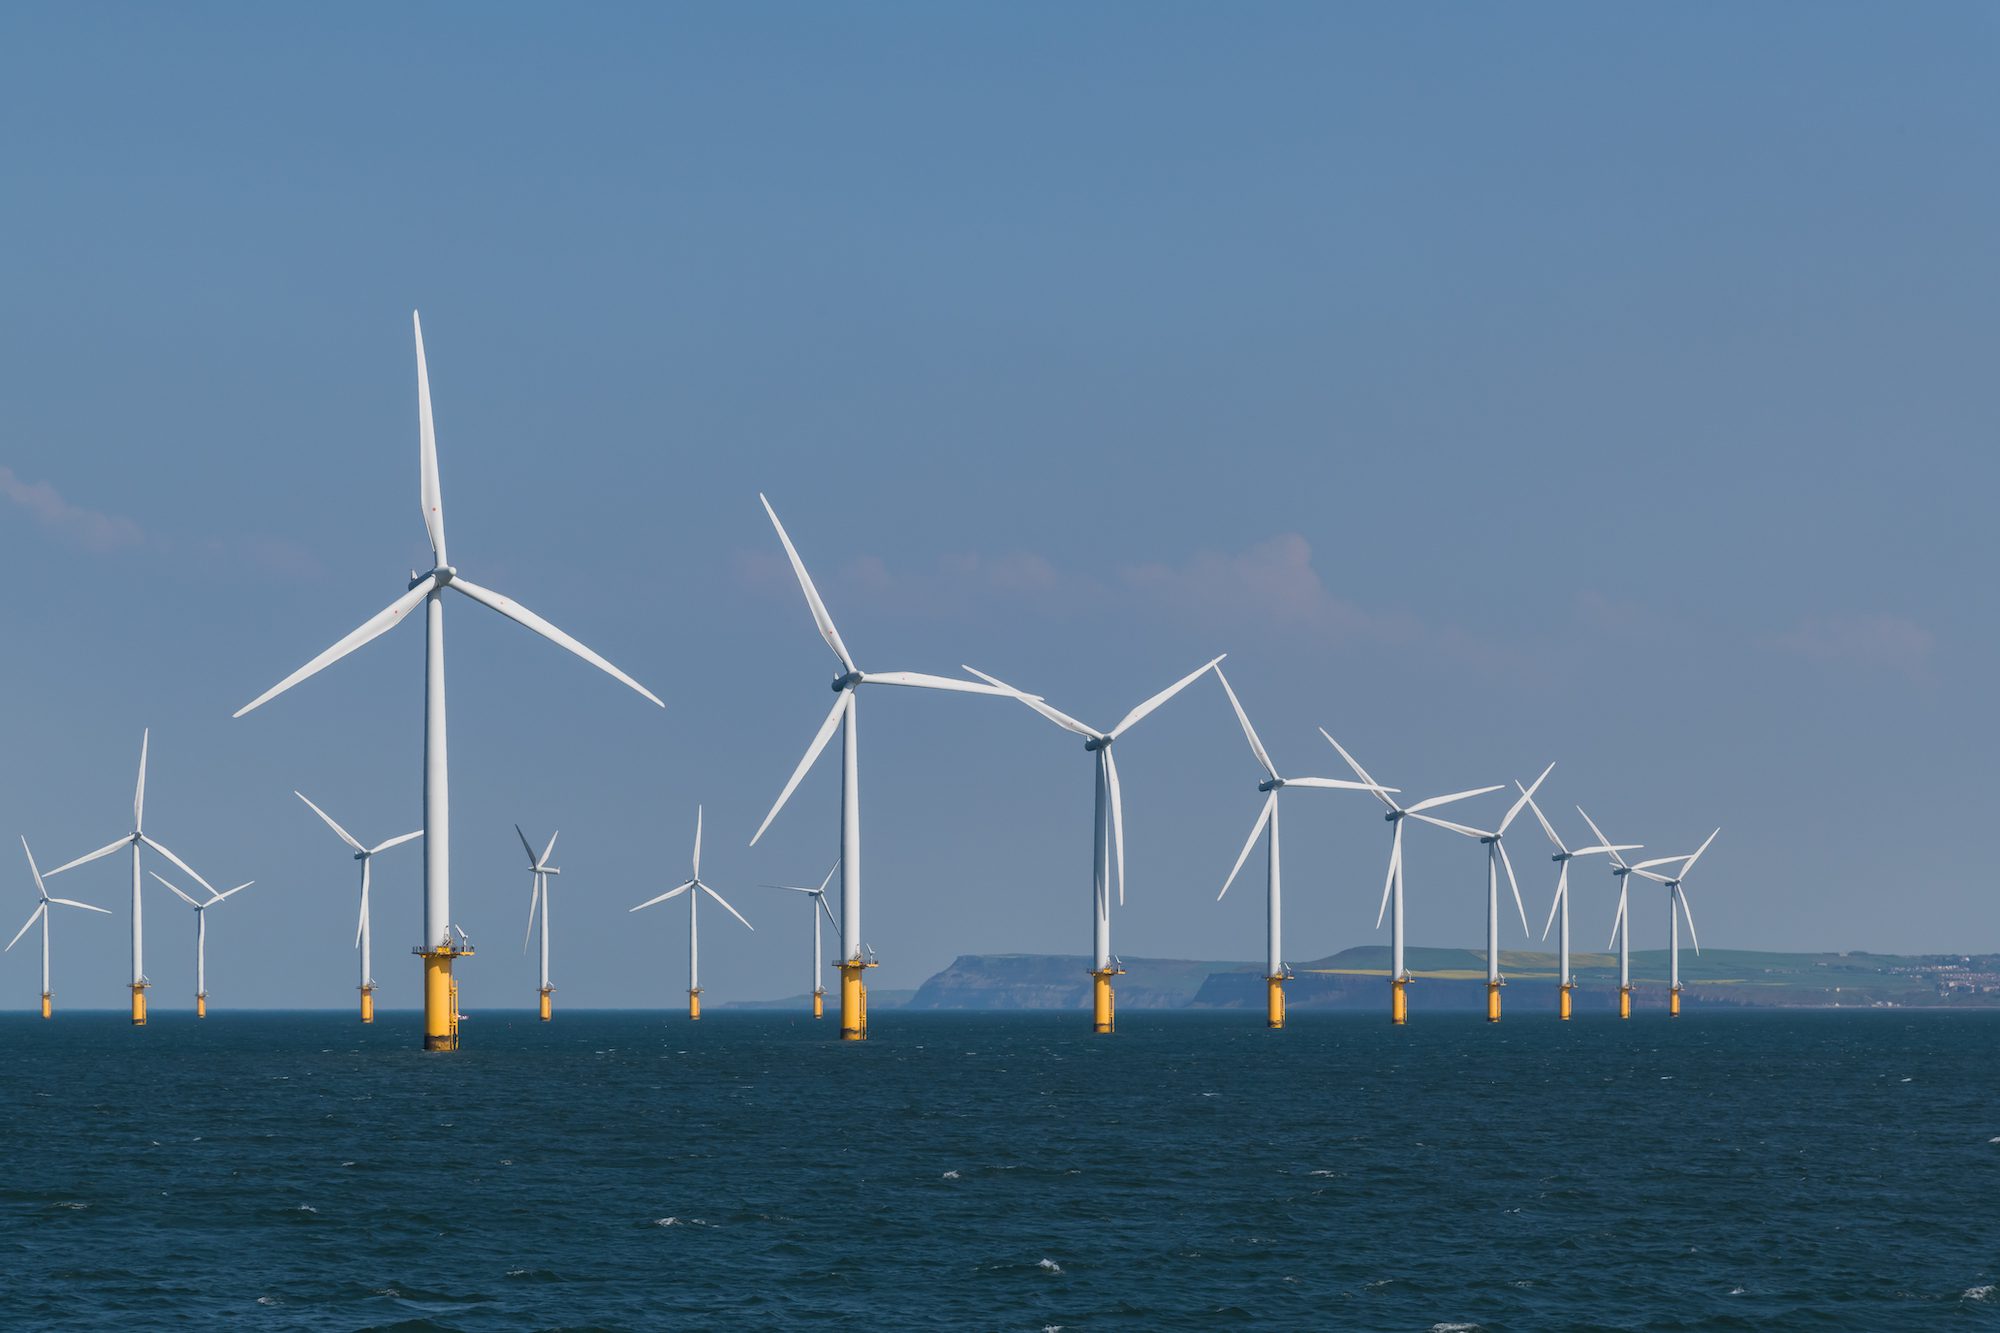 File Photo: Wind farm in the North sea off the coast of United Kingdom.